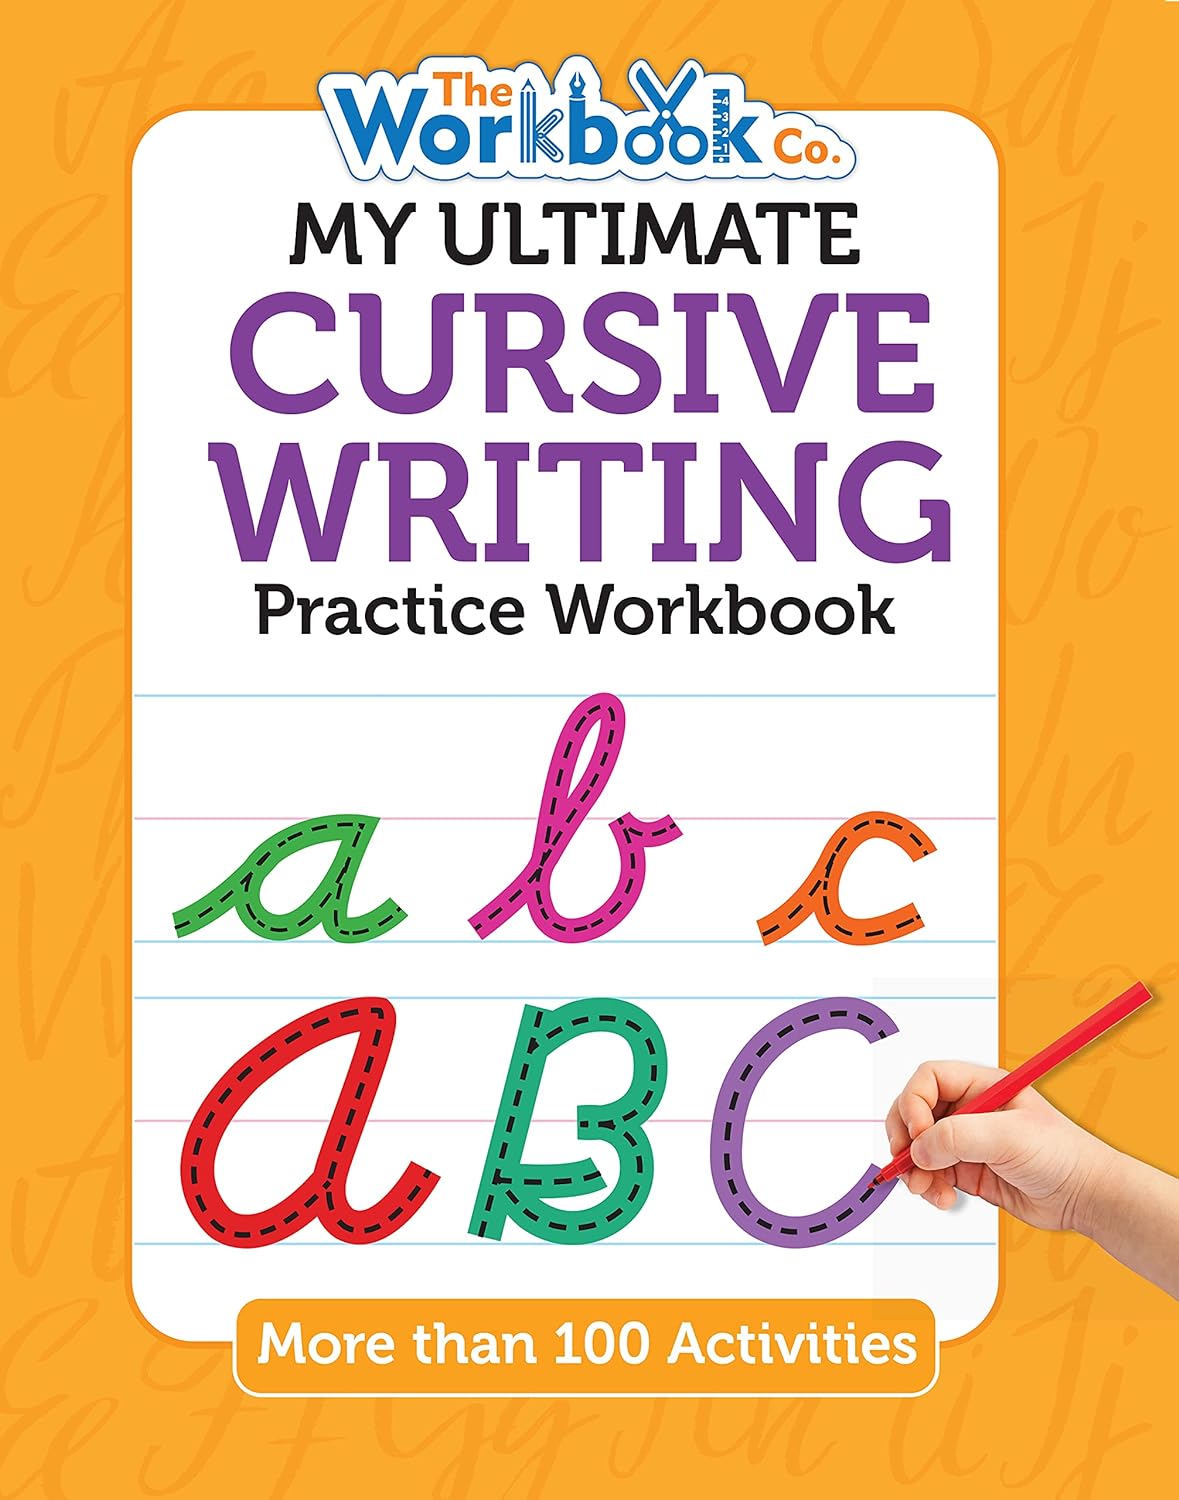 Pegasus My Ultimate Curisve Writing Practice Workbook